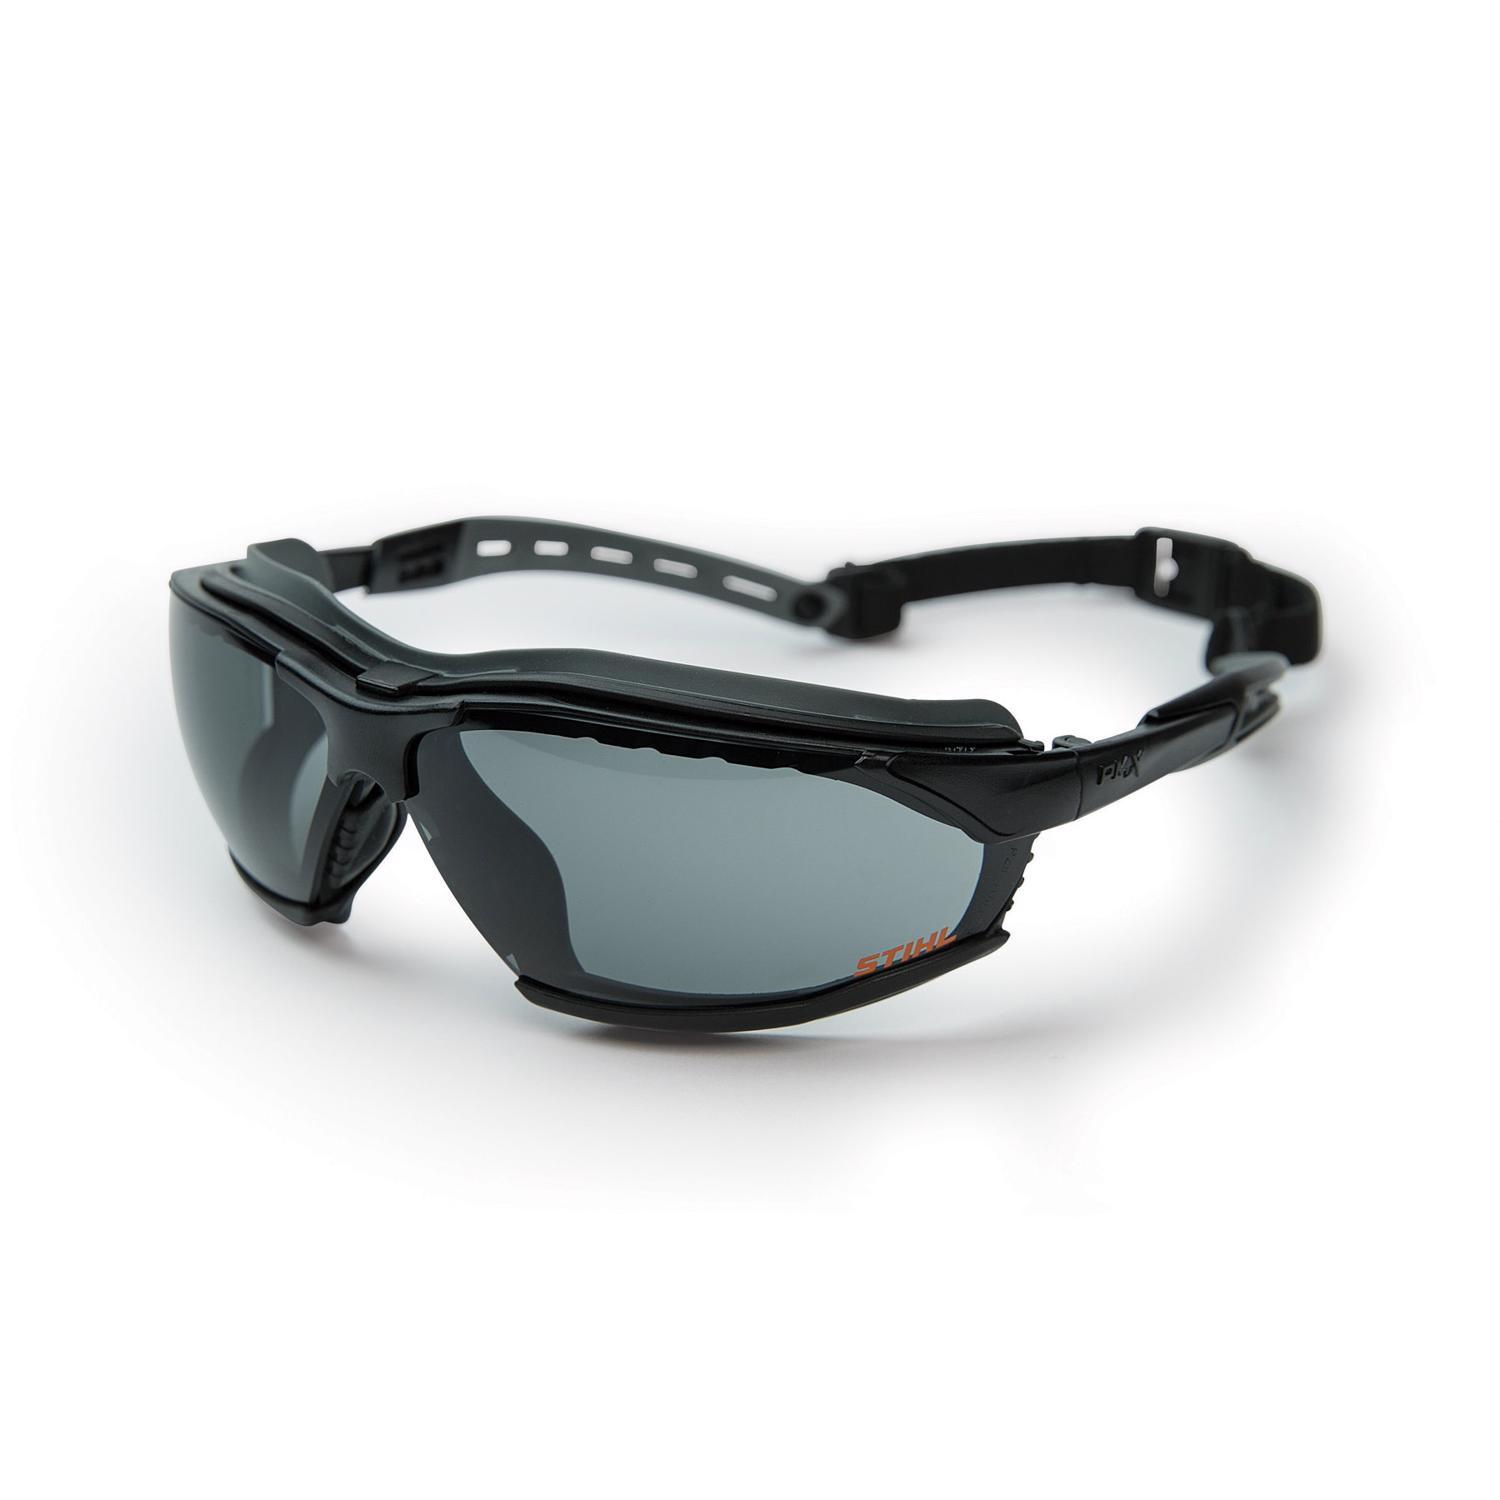 STIHL Safety Goggles Gray Lens Black Frame 1 pk - Ace Hardware